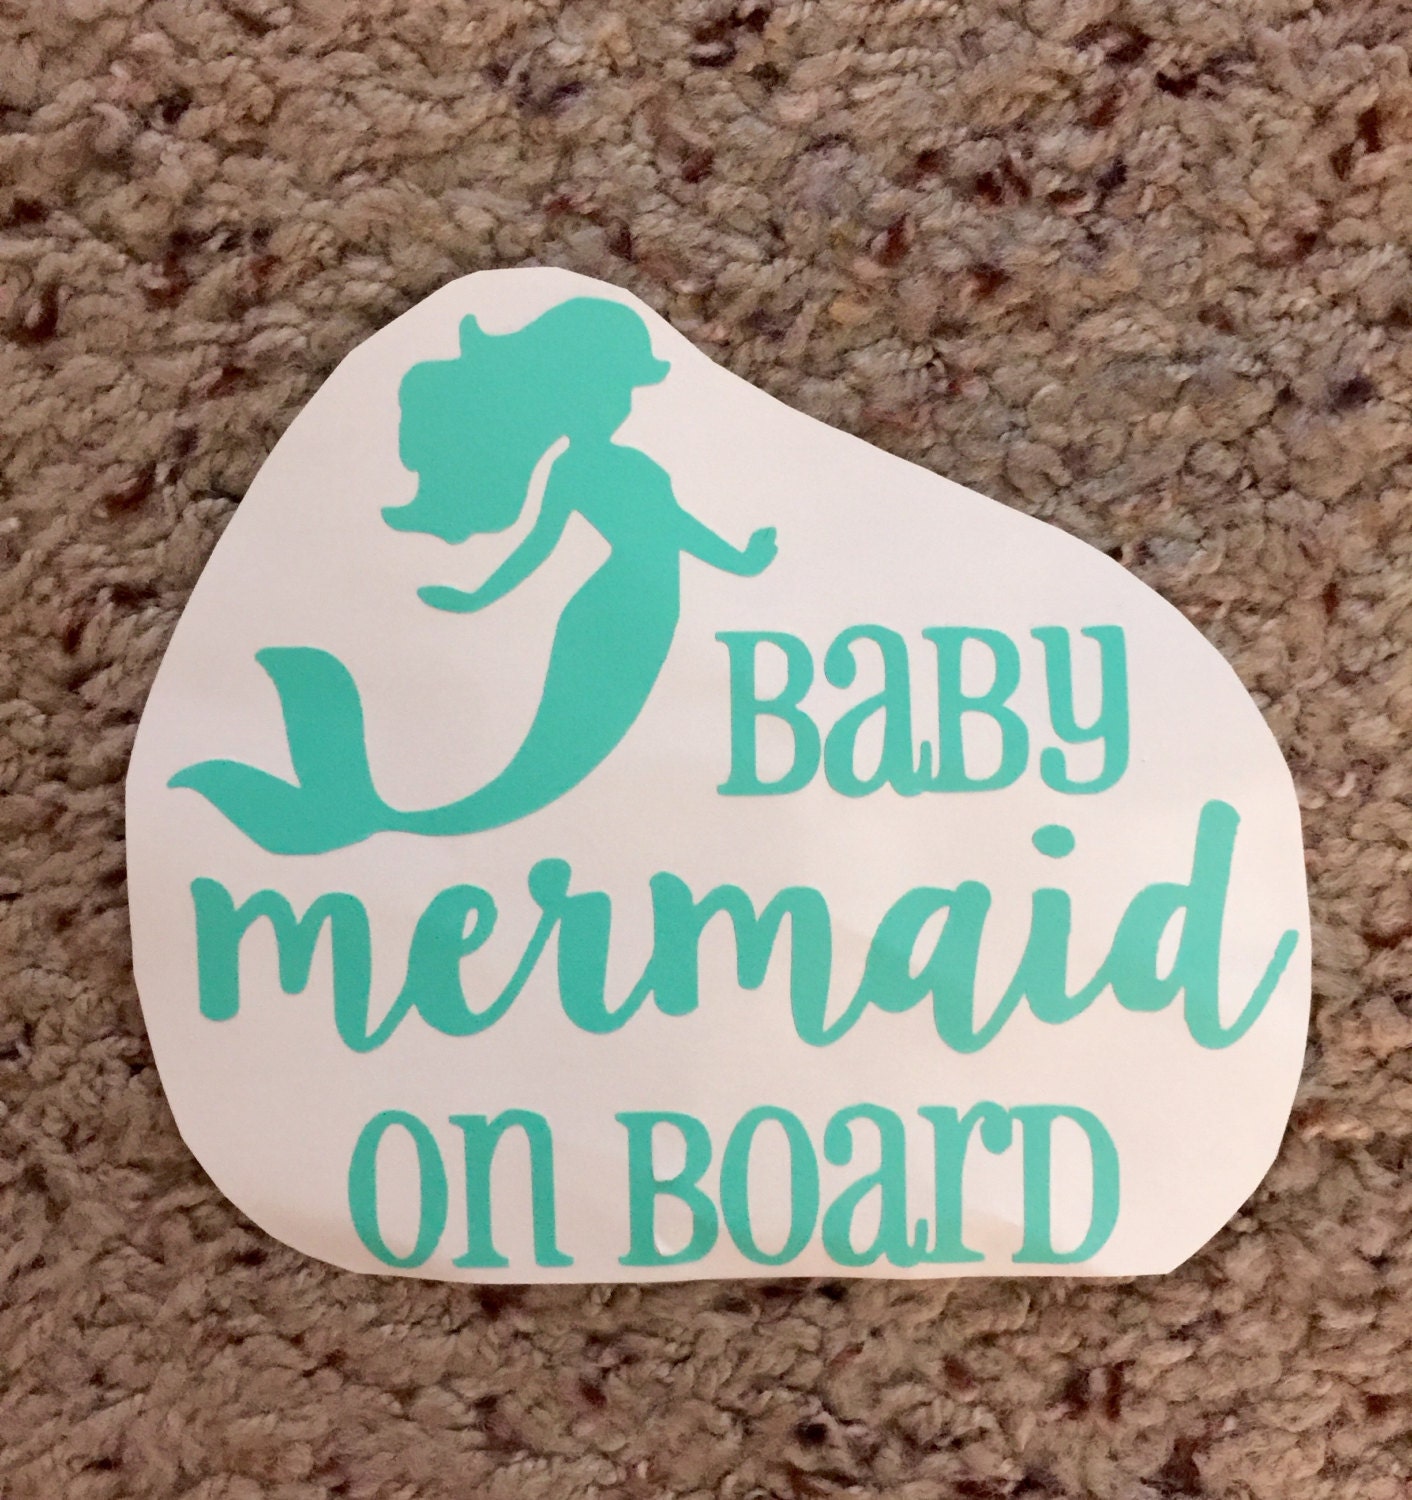 Download Baby Mermaid on Board Car Decal